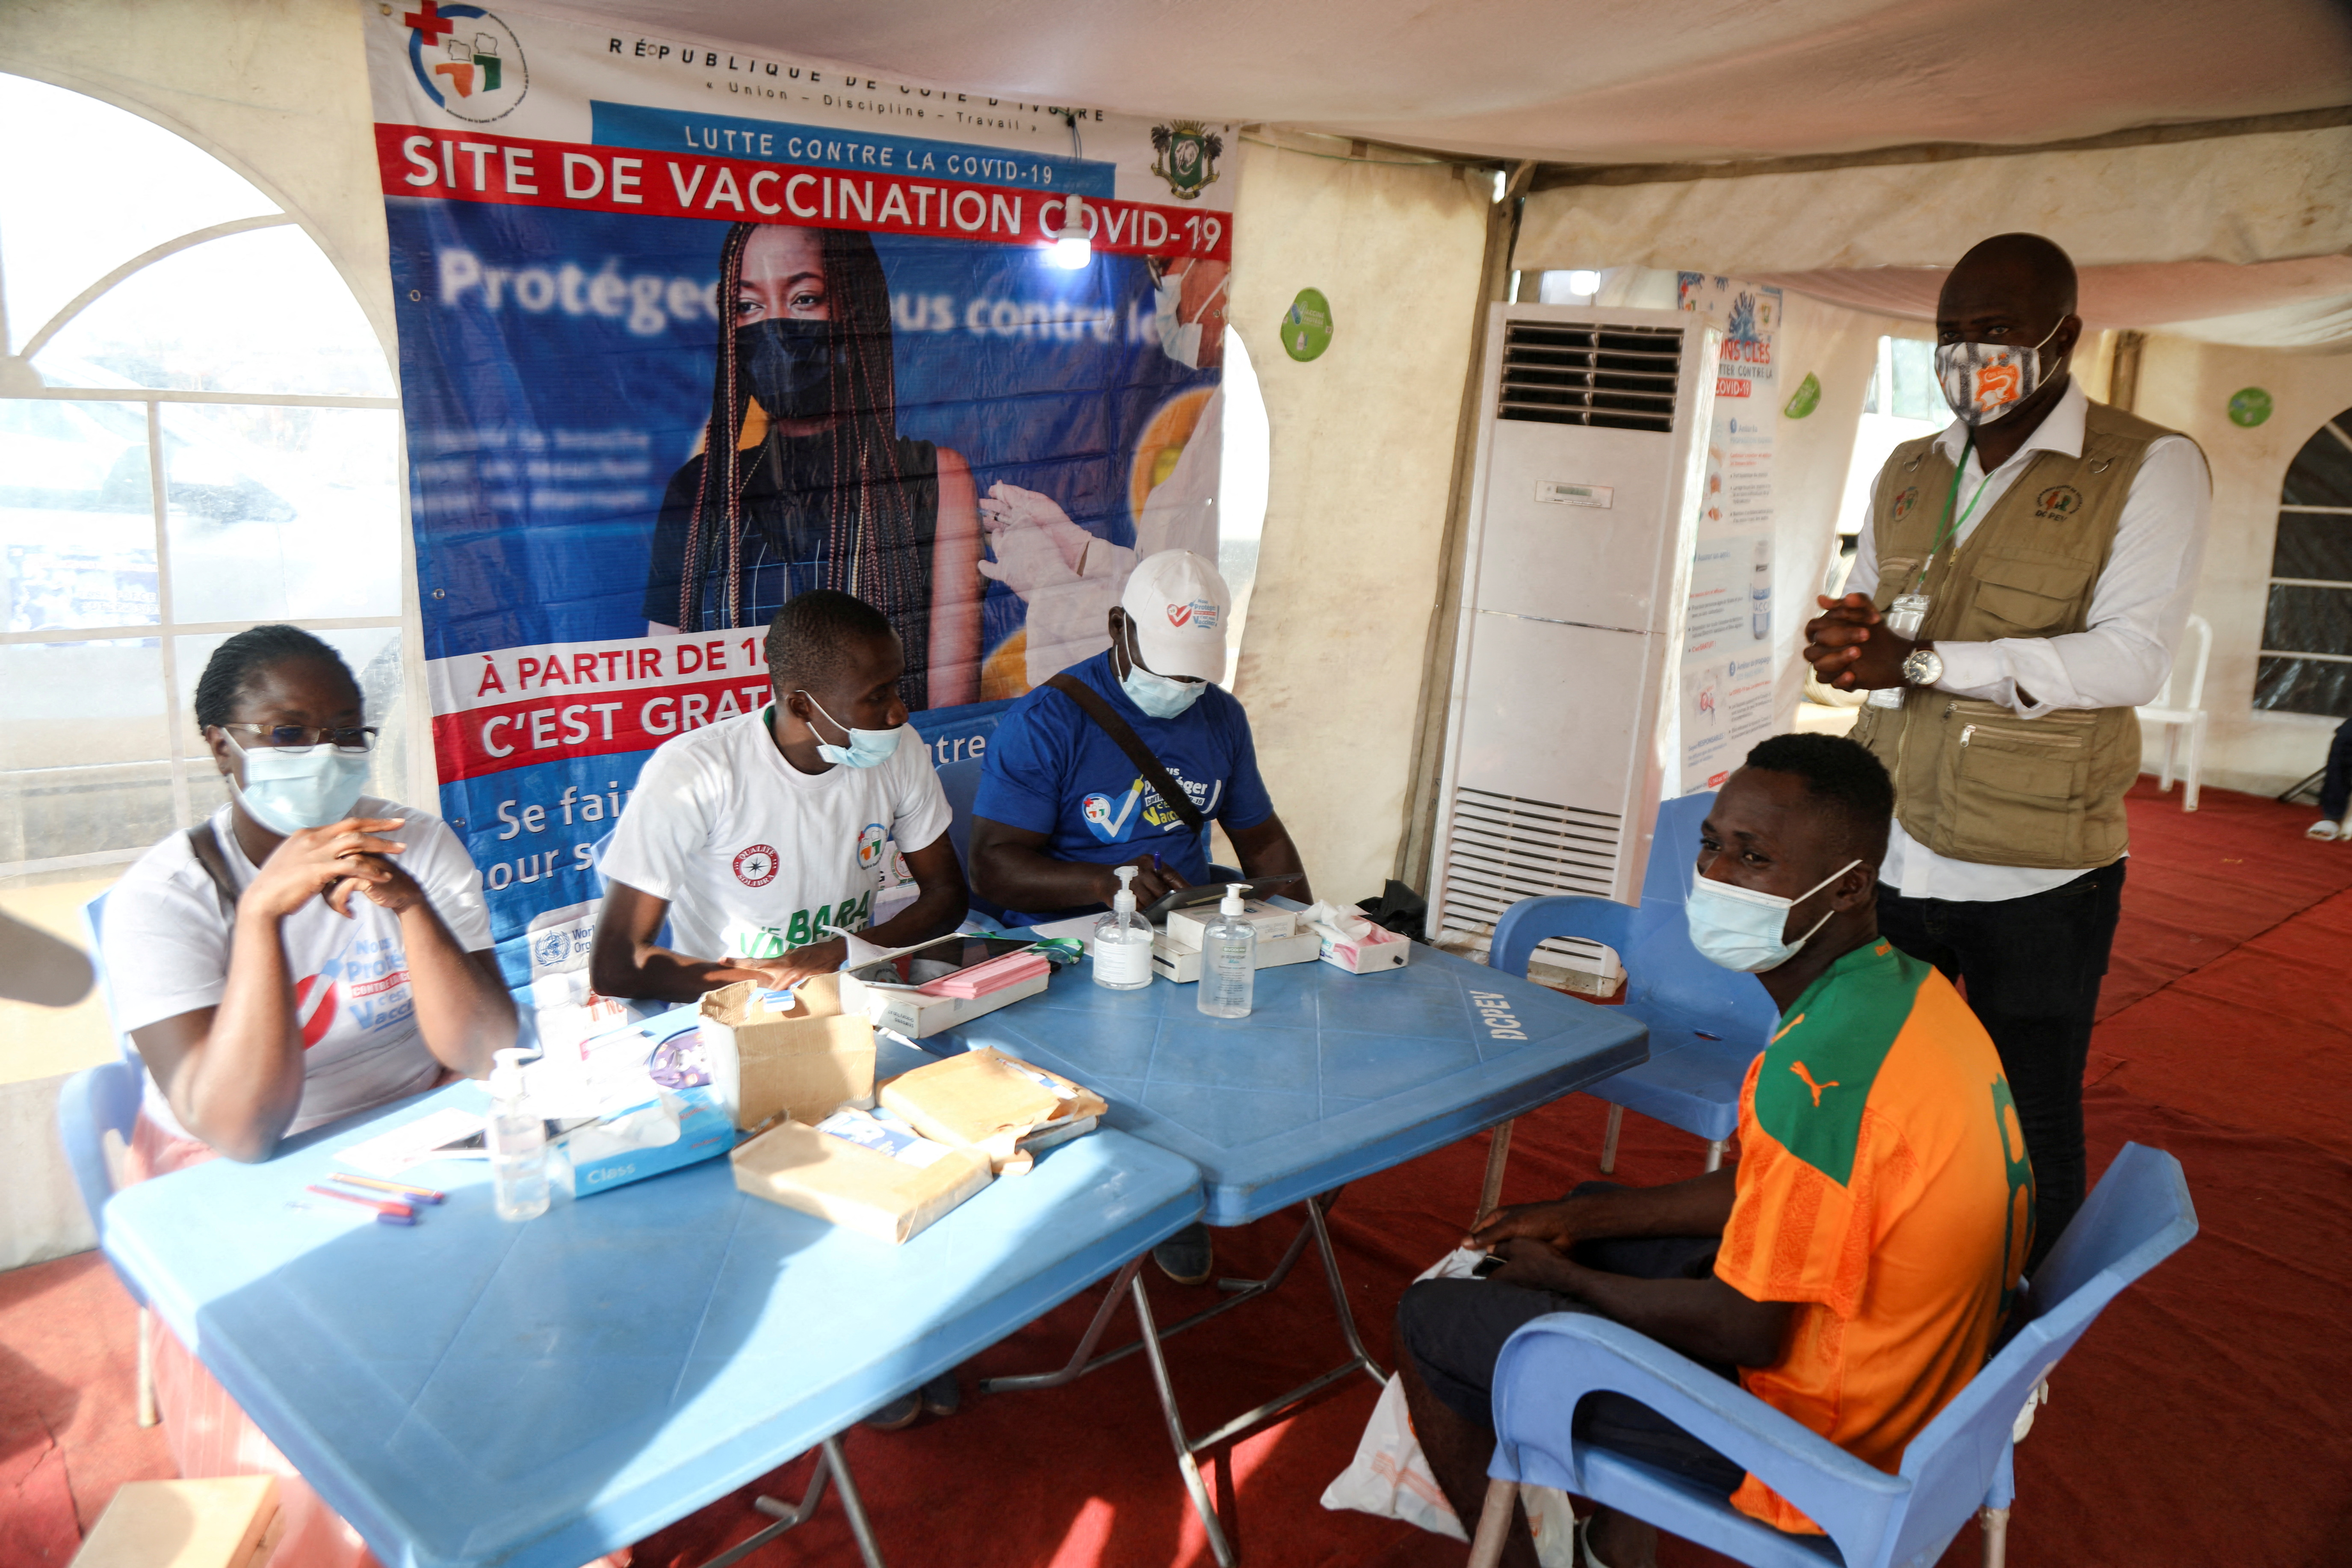 Abidjan soccer fans get the vaccinated against the coronavirus disease (COVID-19) to watch their team play in Abidjan